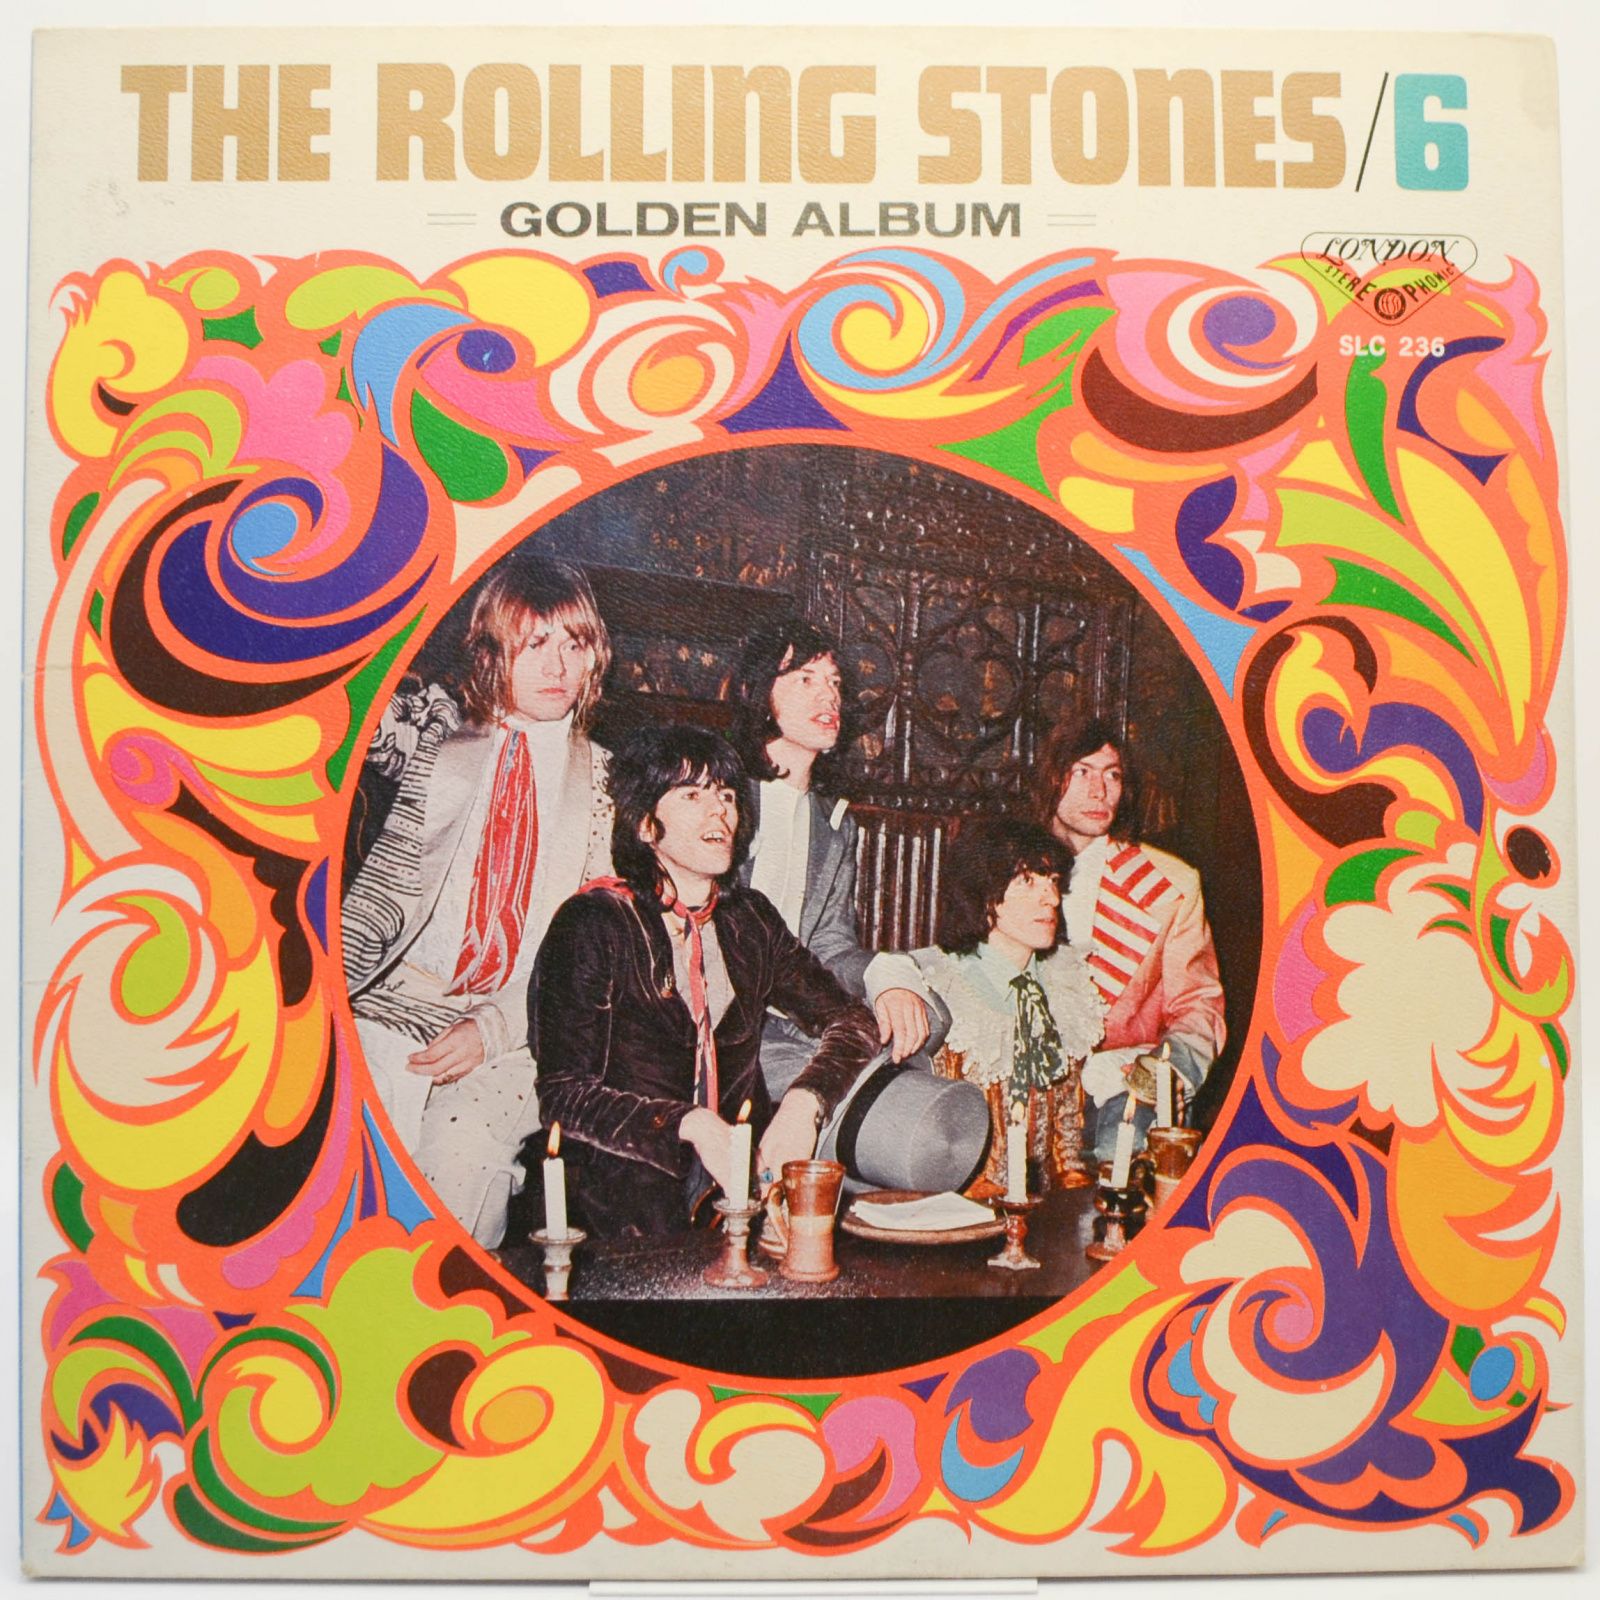 Rolling Stones — The Rolling Stones 6 - Golden Album, 1966